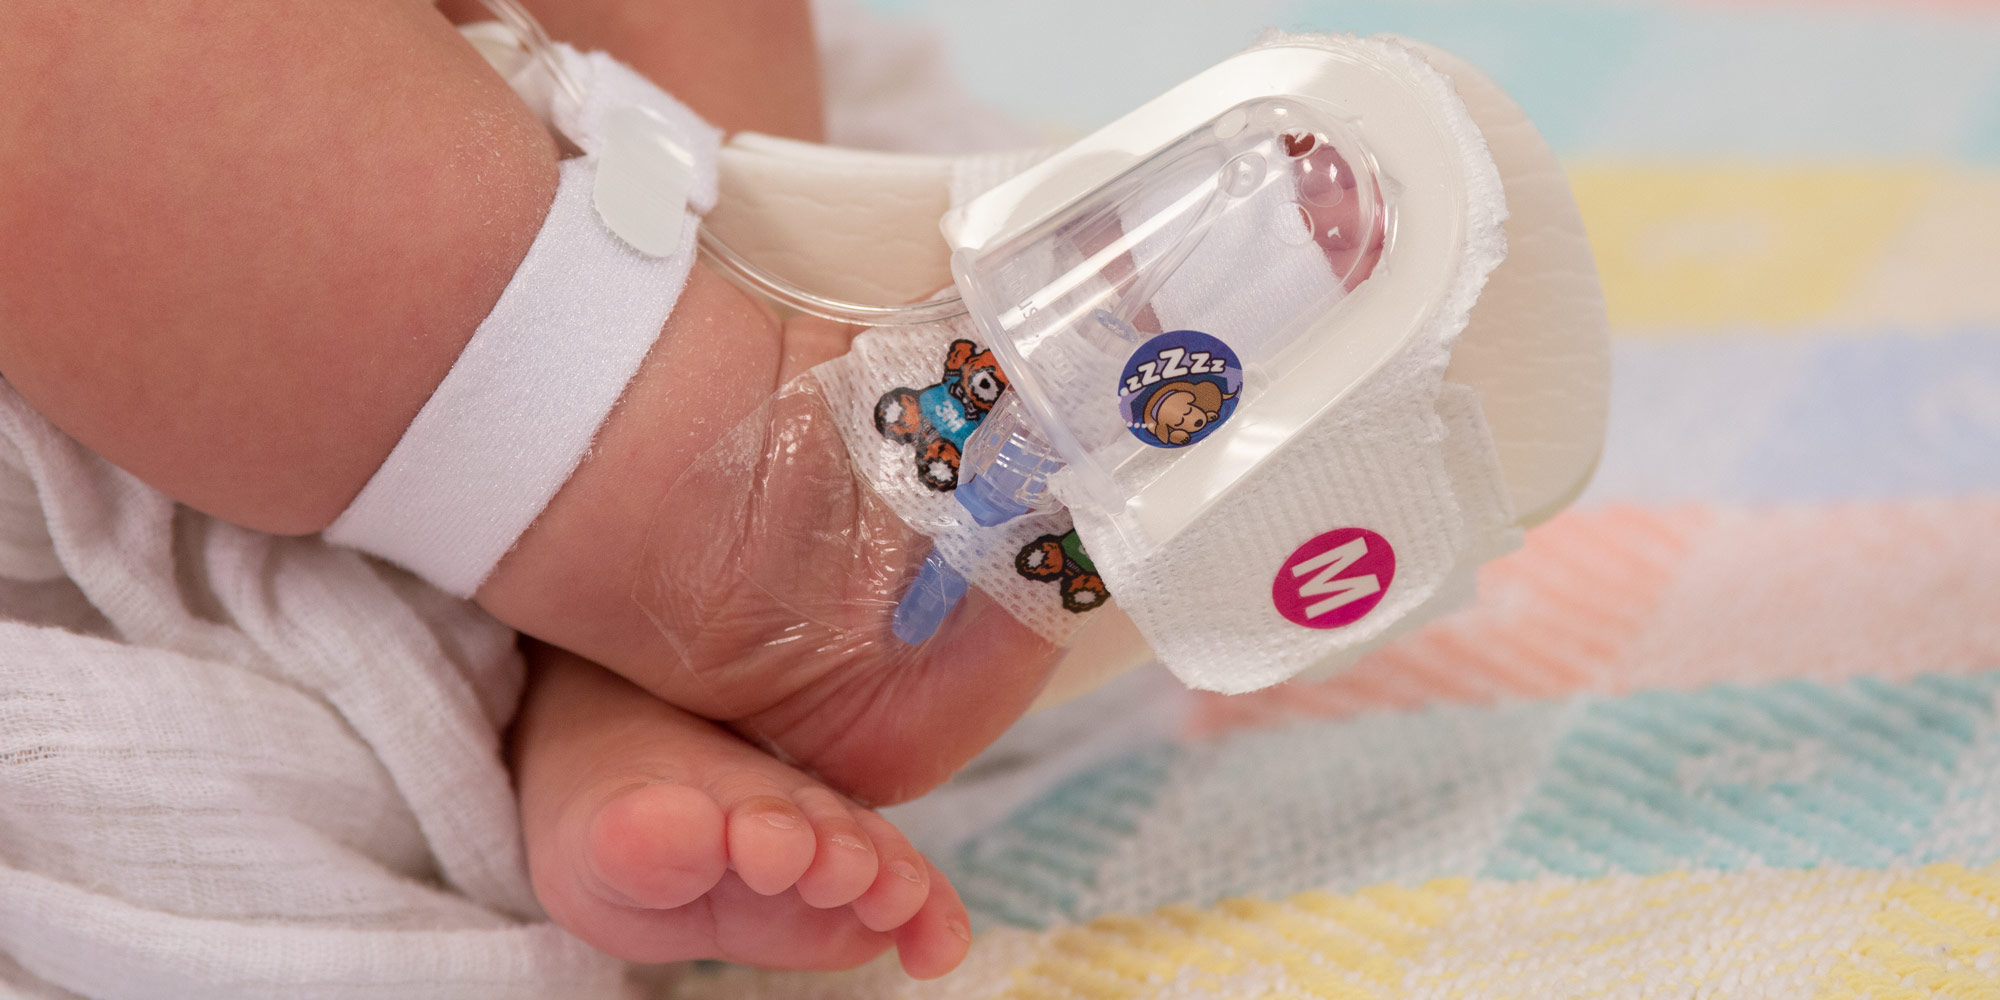 330M I.V. House UltraDressing protecting IV insertion site on infant's foot